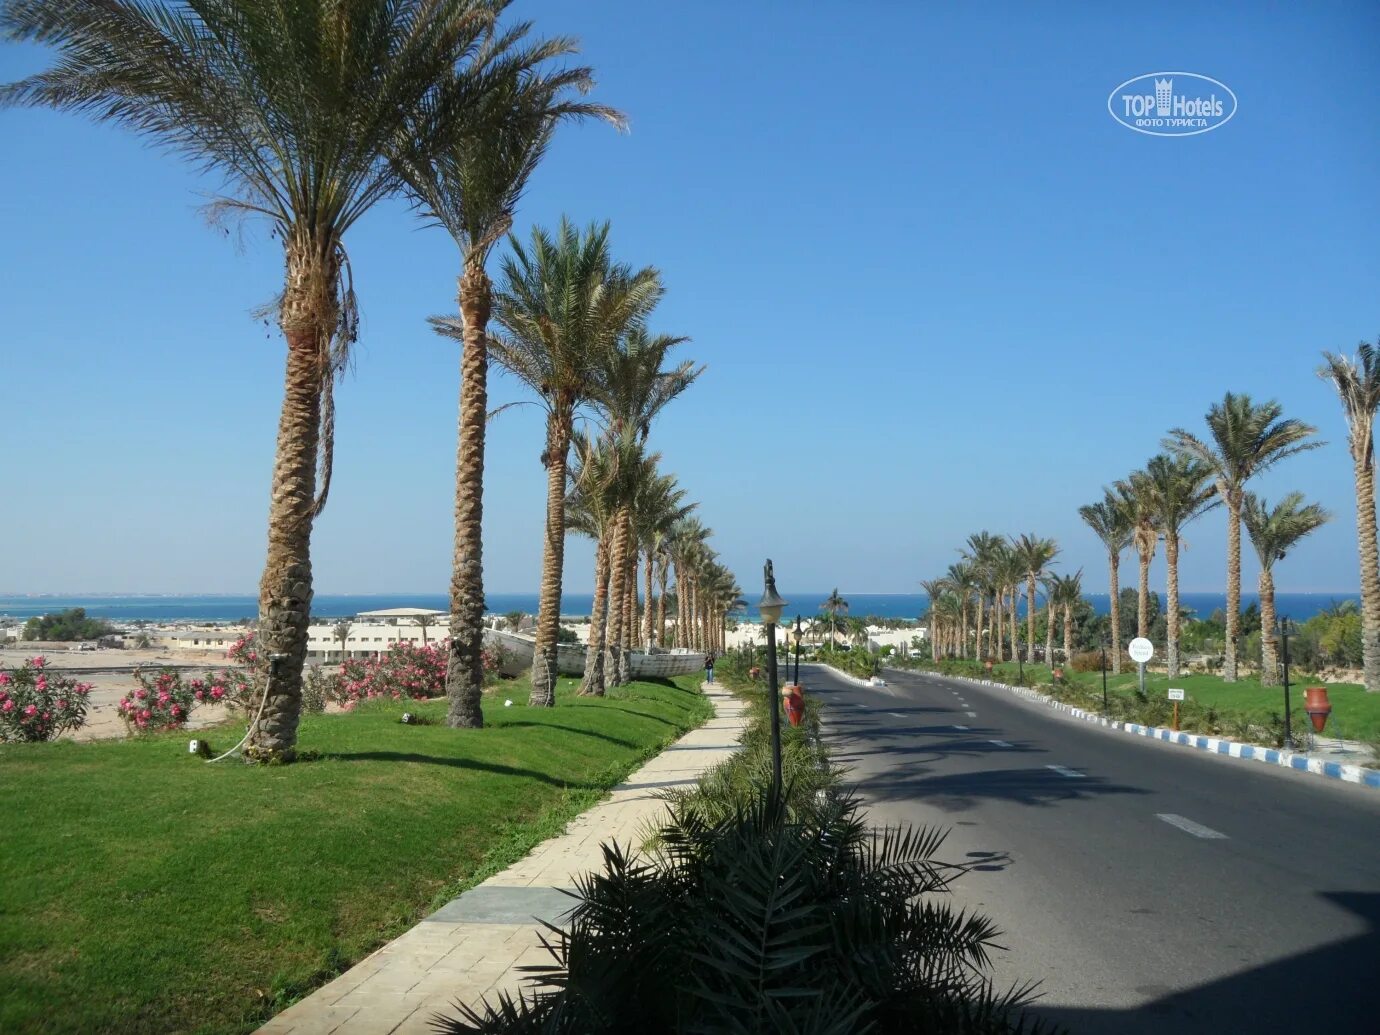 Grand Azur Horizon Хургада. Отель Гранд Азур в Хургаде. Отель Гранд Азур Горизонт в Хургаде. Coral Beach Hotel Hurghada 4.